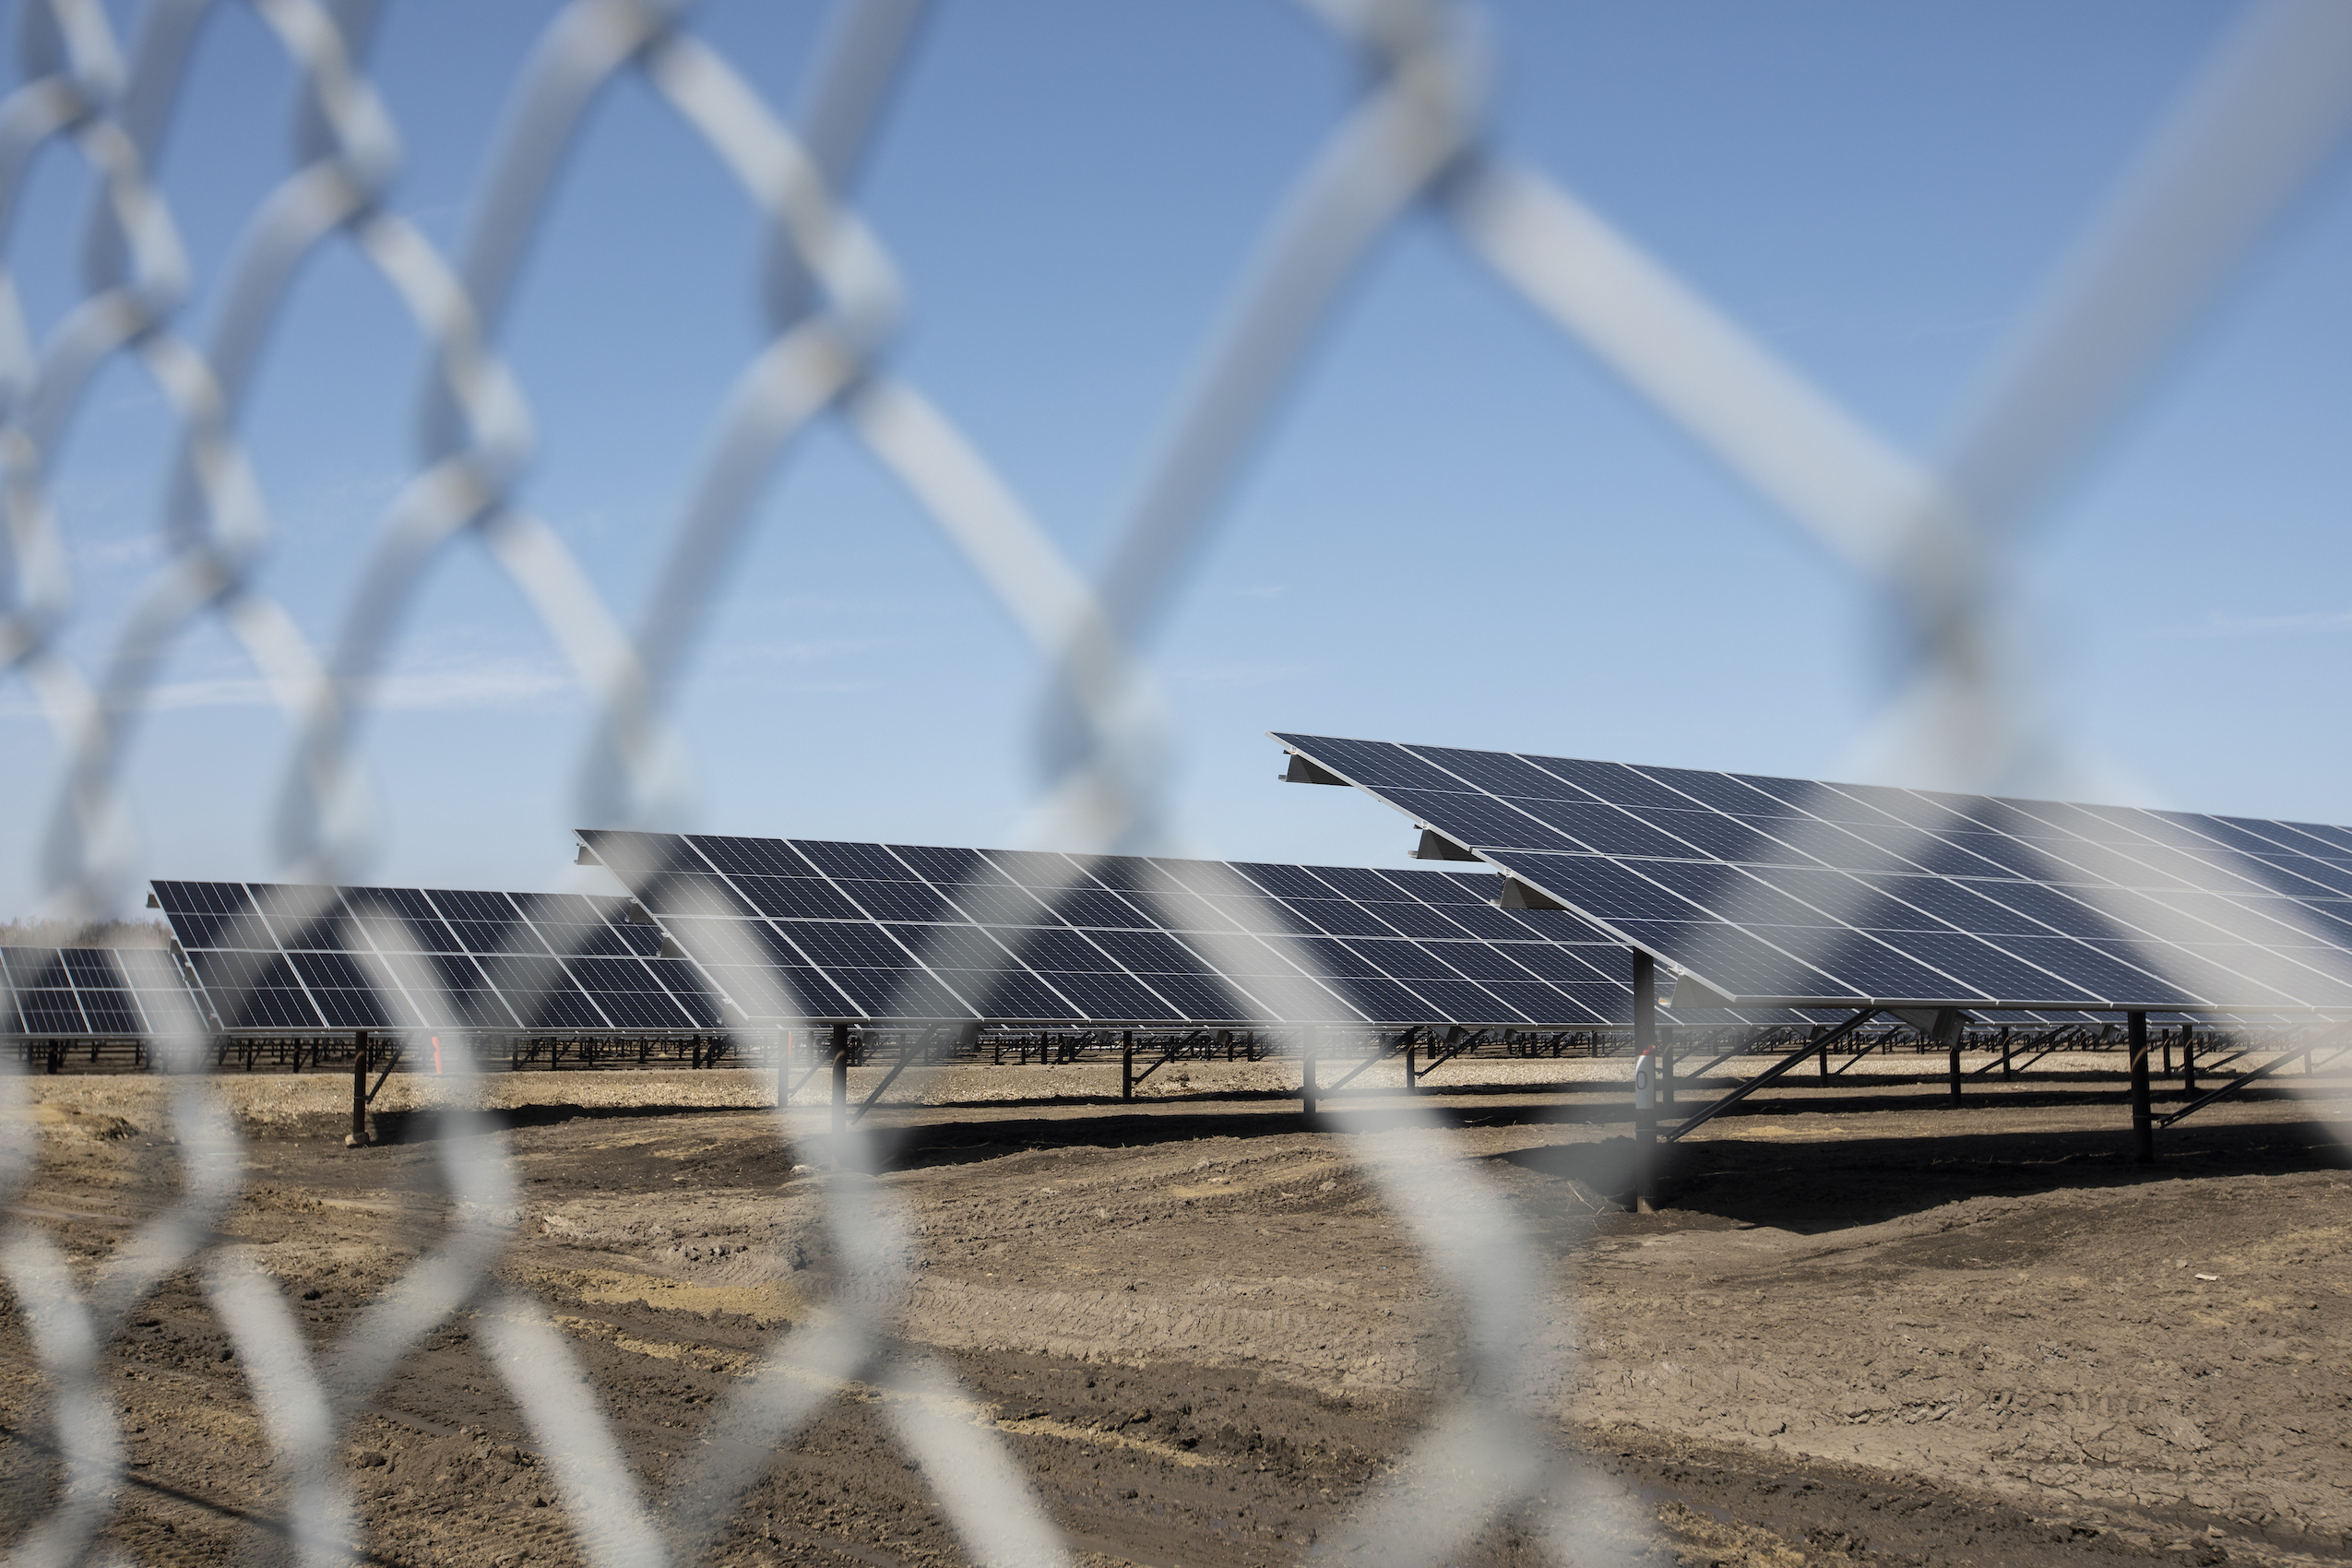 Alberta solar farm visible behind chain-link fence